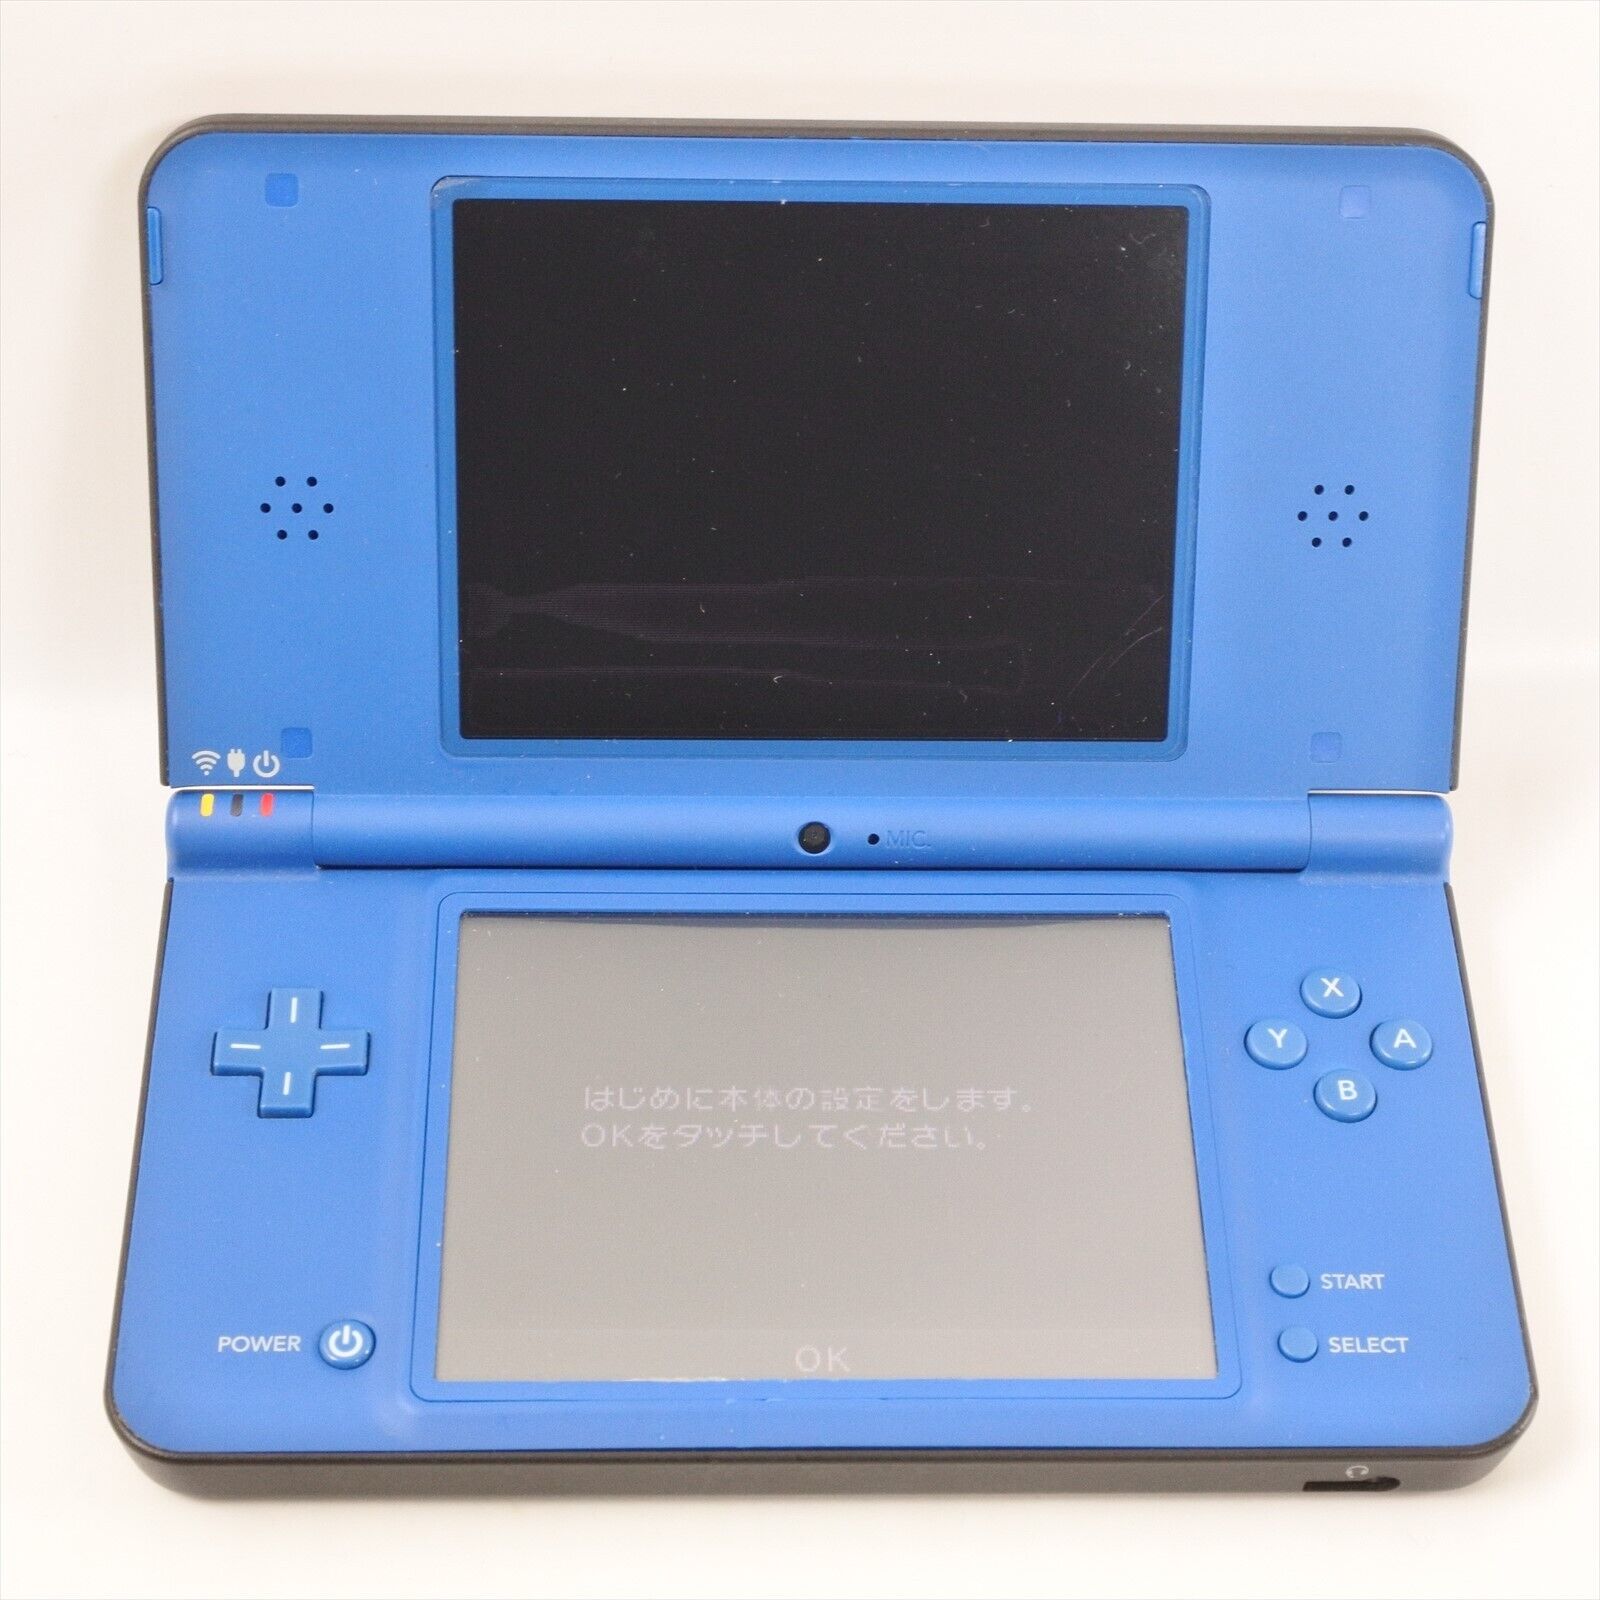 JUNK Nintendo DSi LL Console BLUE UTL-001 LCD Not working WJF116522953 nds